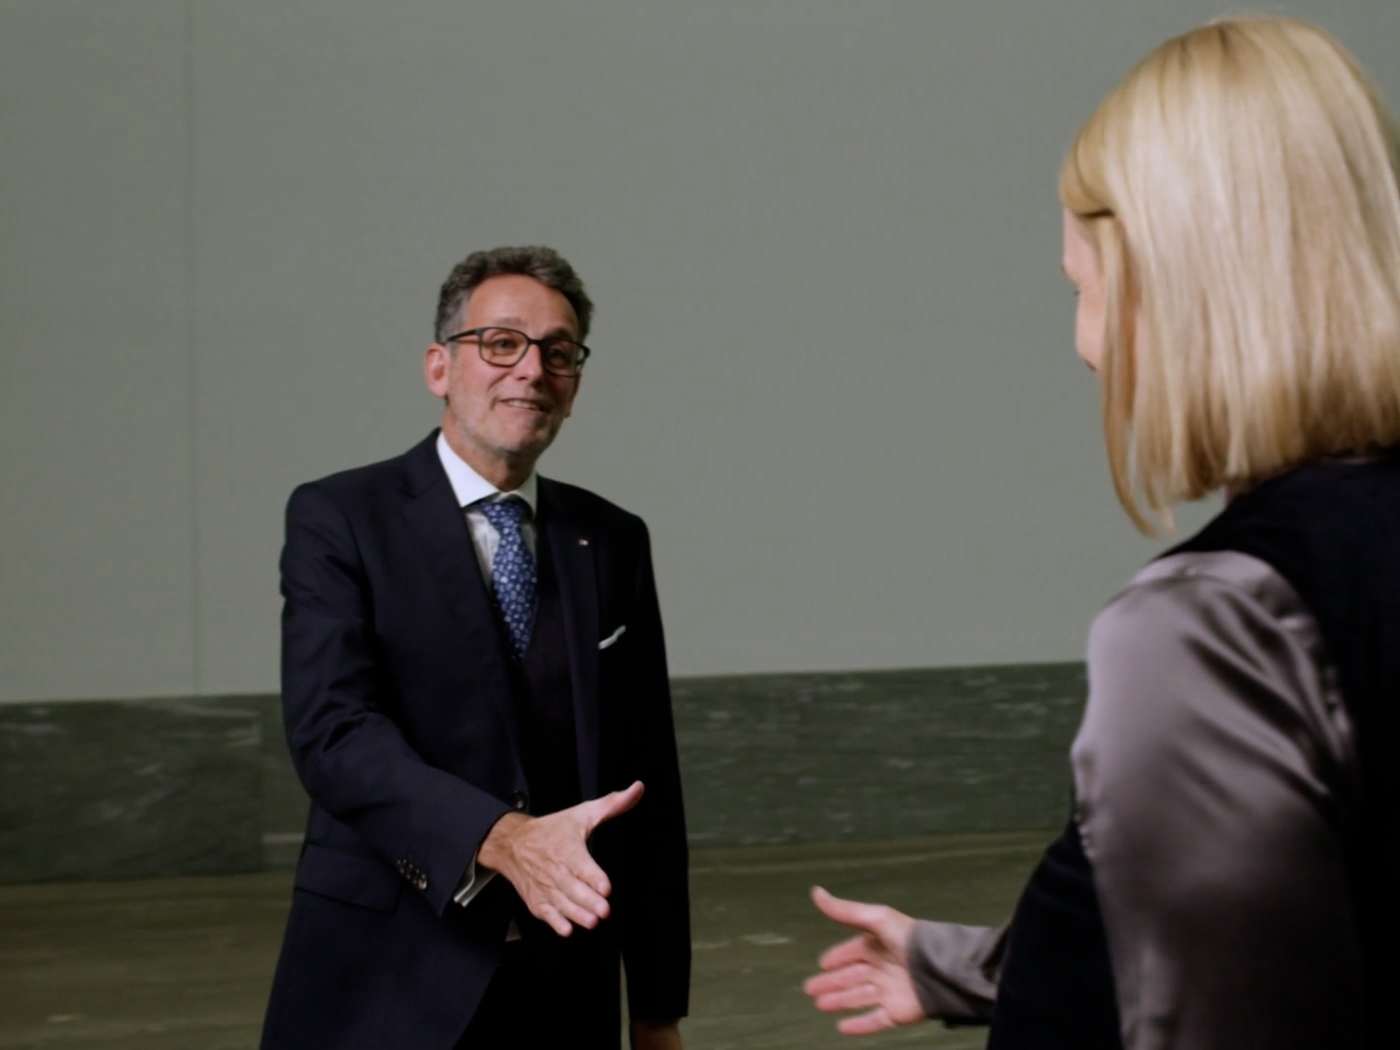 Gerhard Burtscher greets female customer via handshake